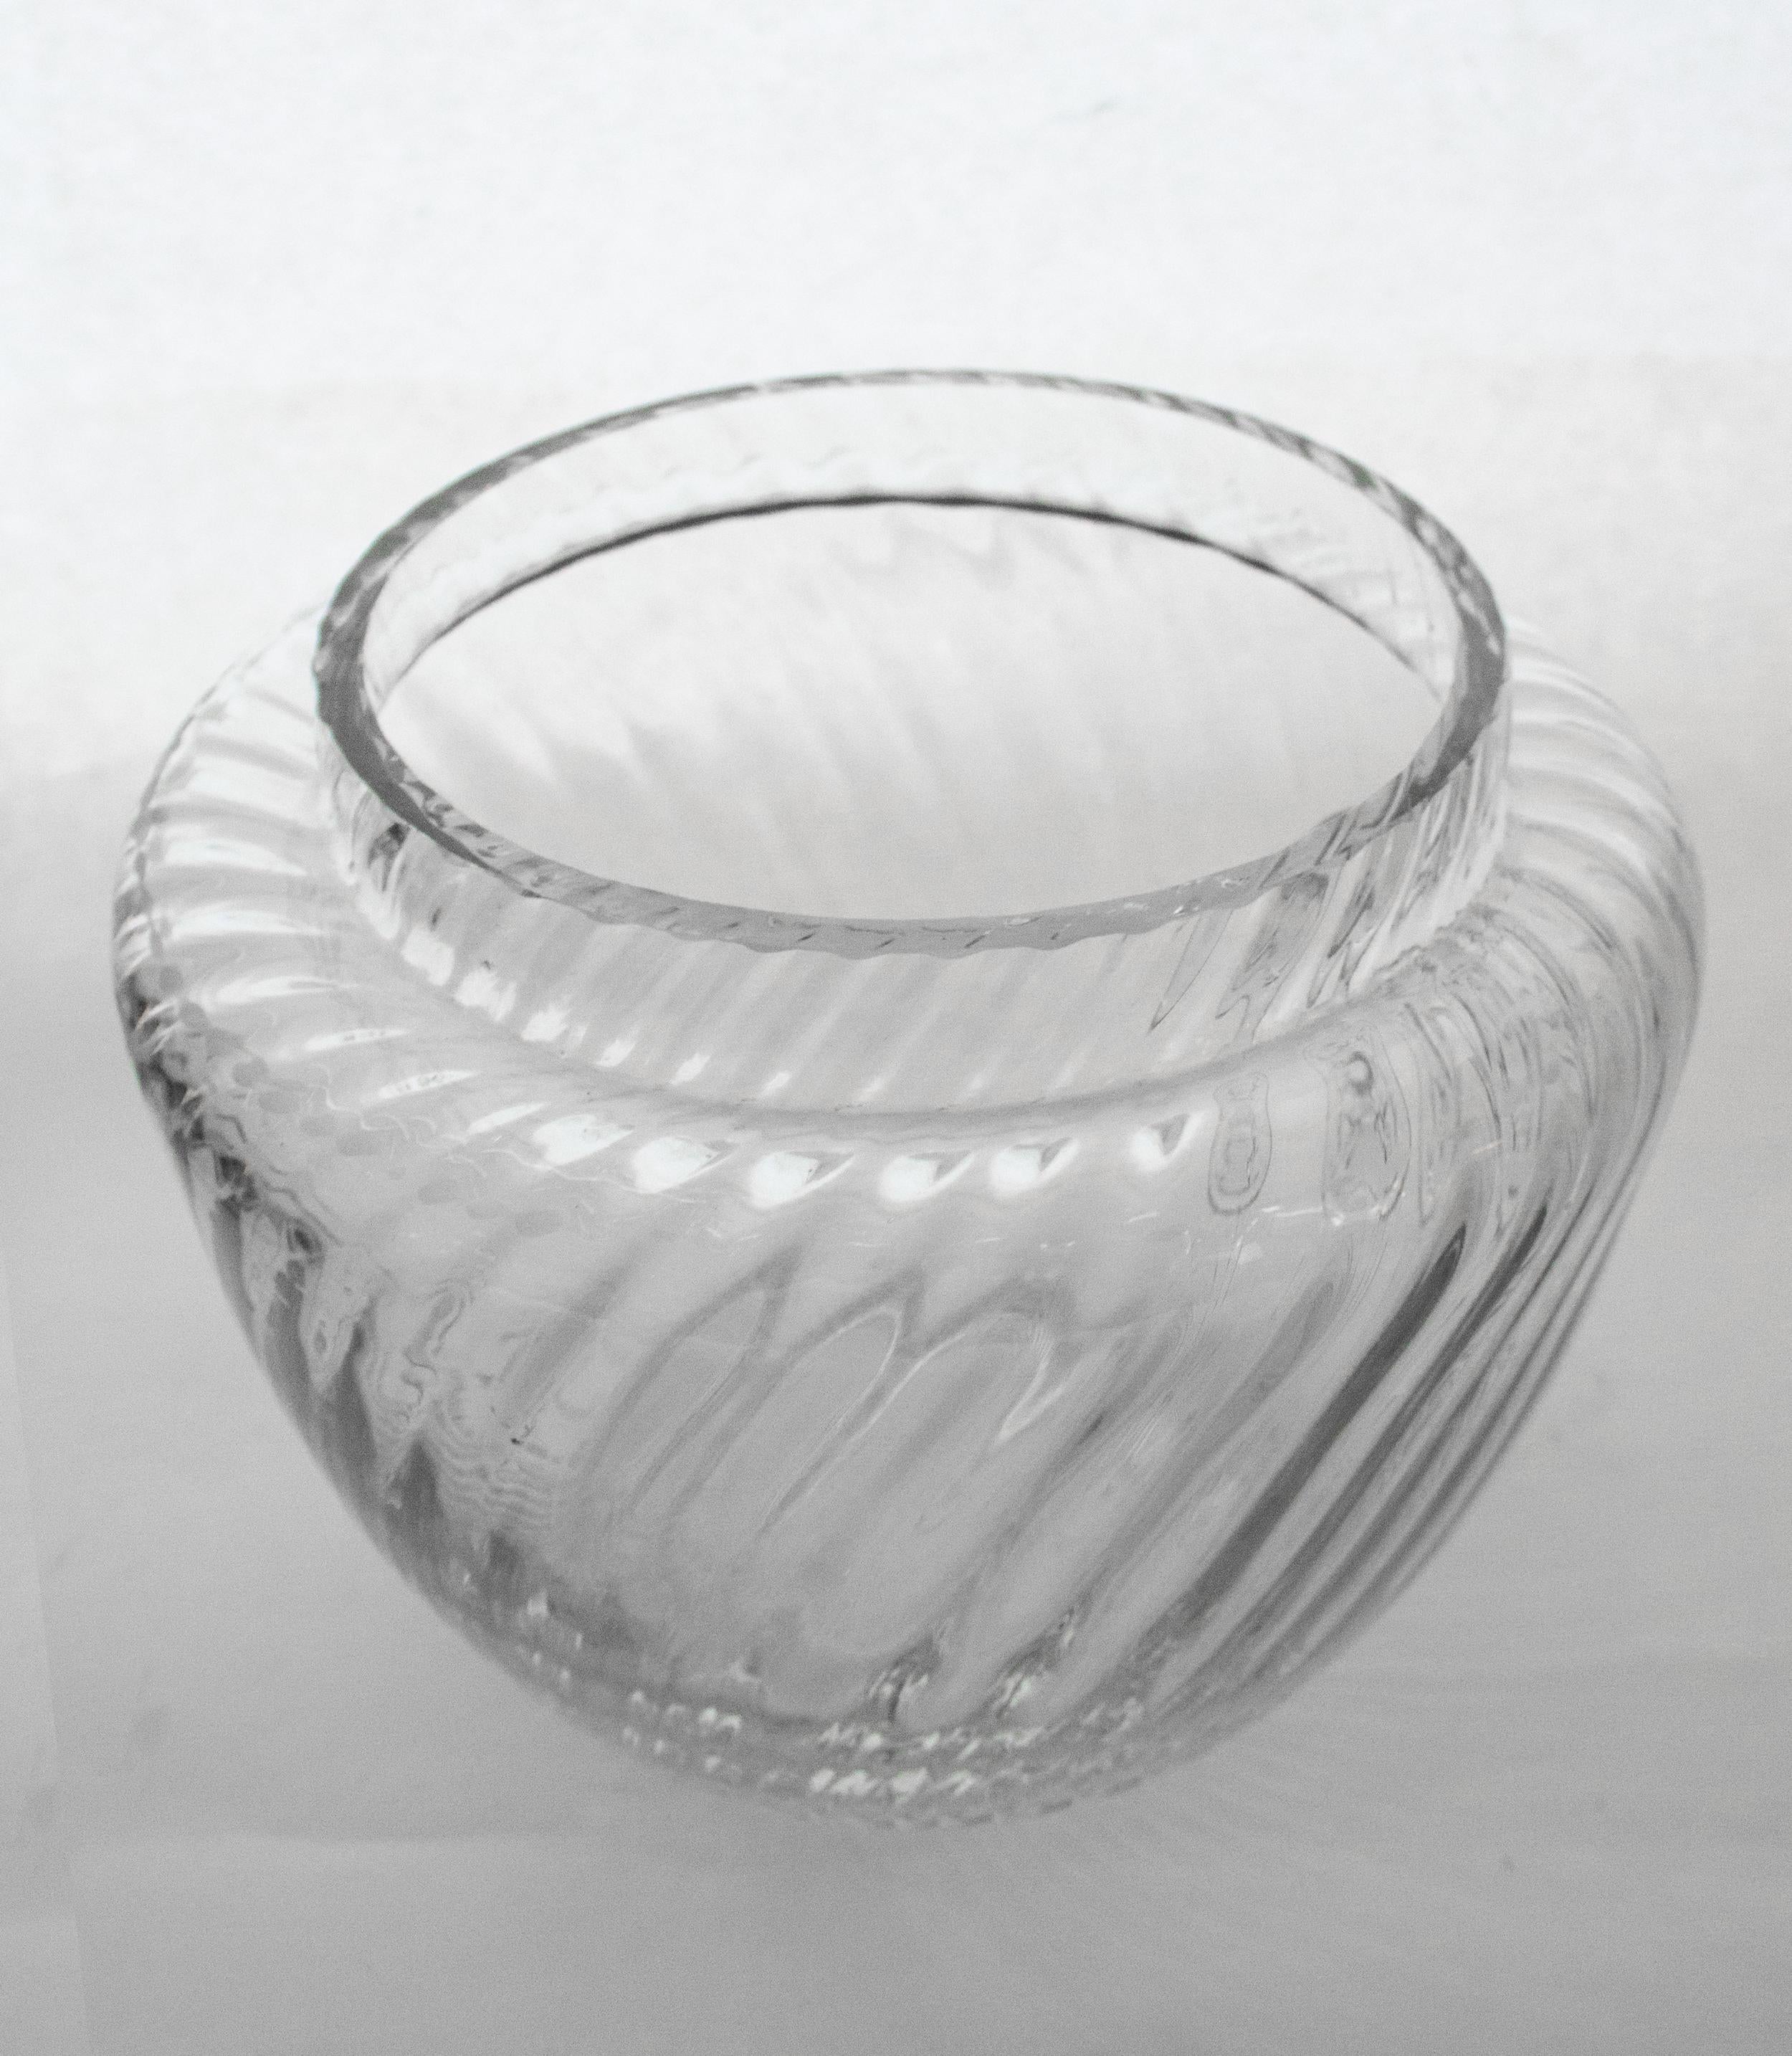 Scandinavian Modern Large Turbine Glass Bowl Signed by the Swedish Glass Artist Erik Höglund, 1980 For Sale